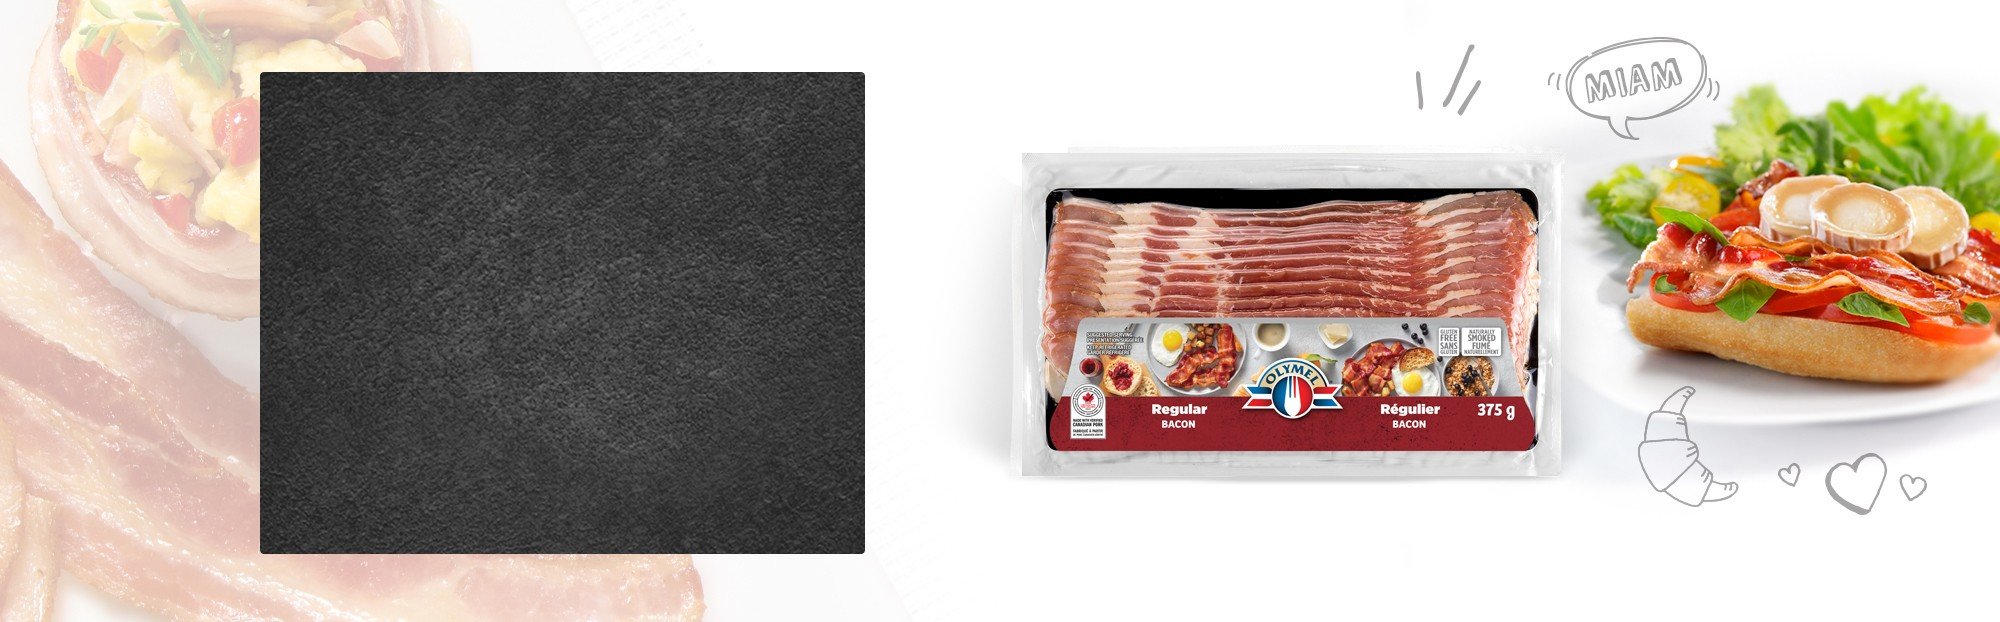 Naturally Smoked Bacon